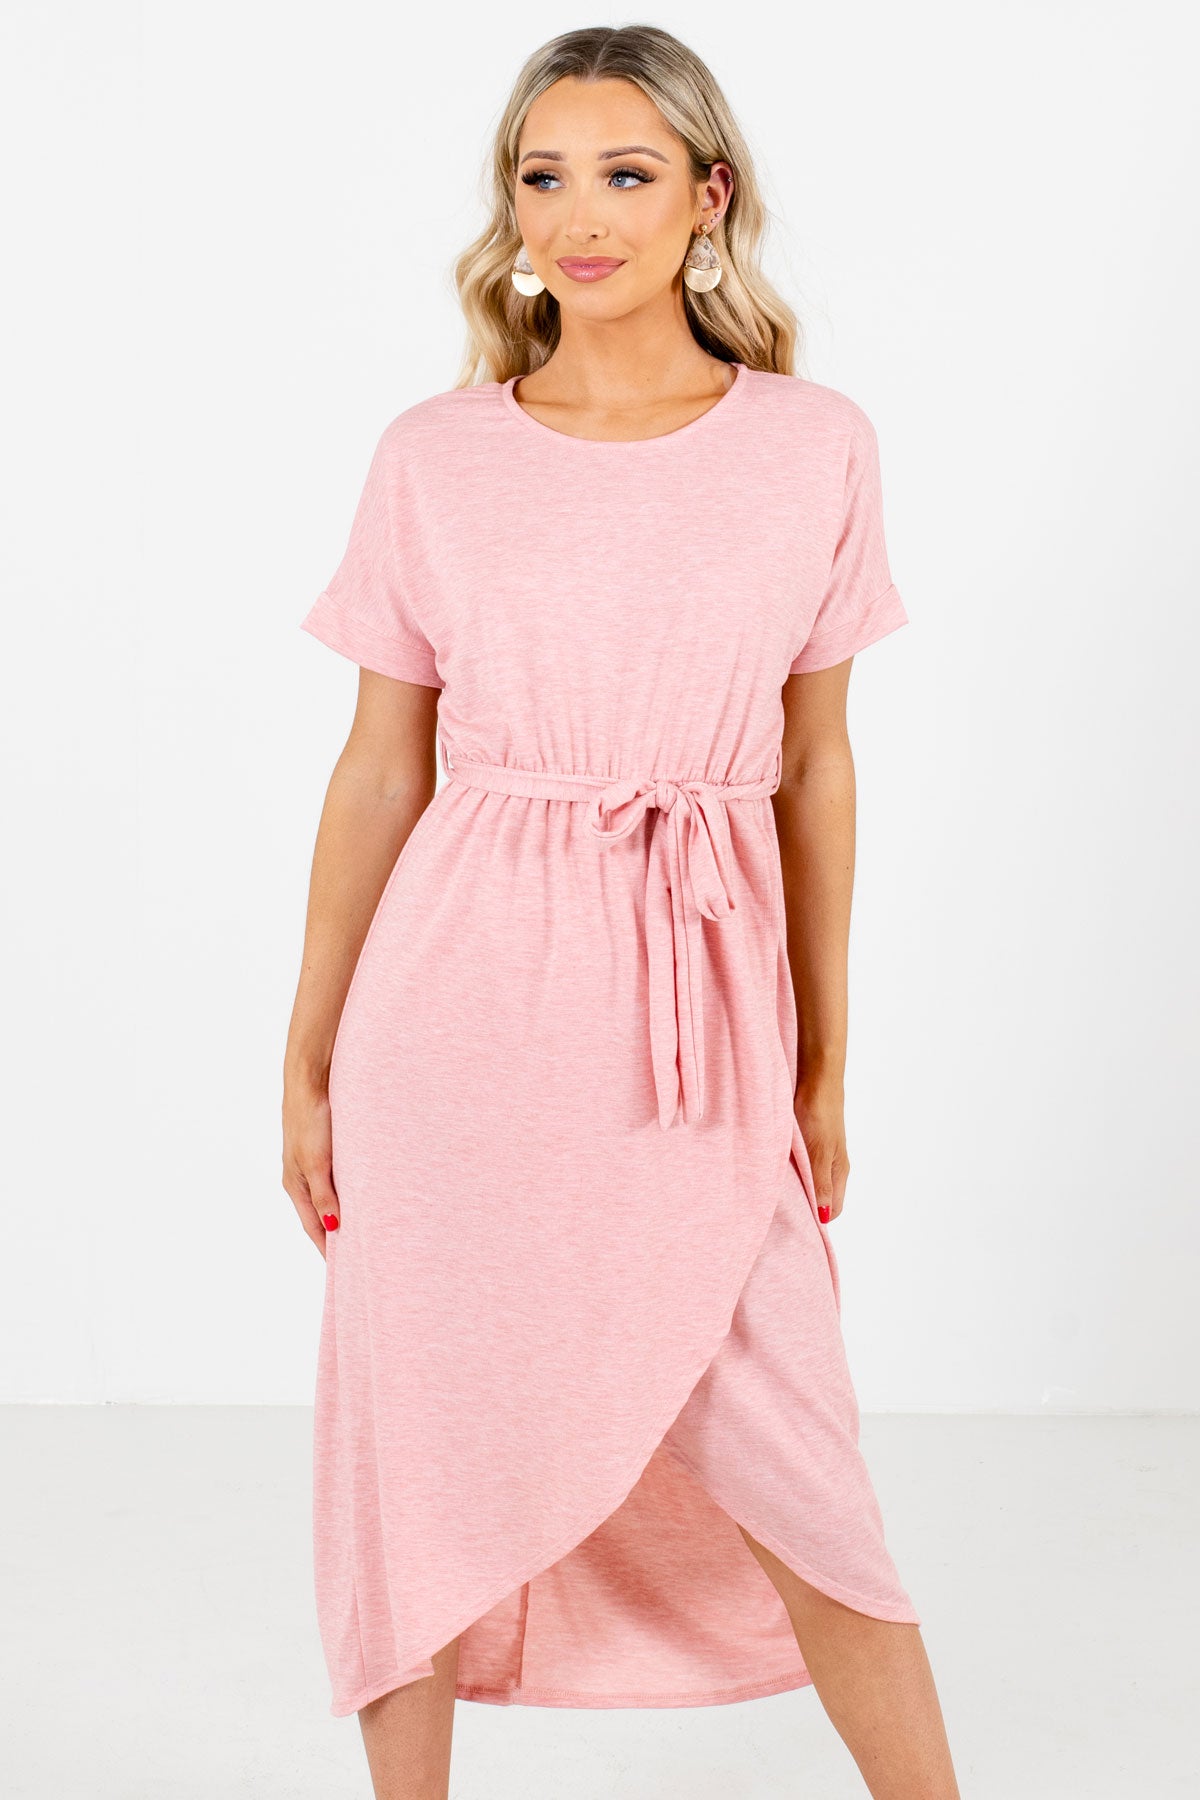 Pink Faux Wrap Style Boutique Knee-Length Dresses for Women